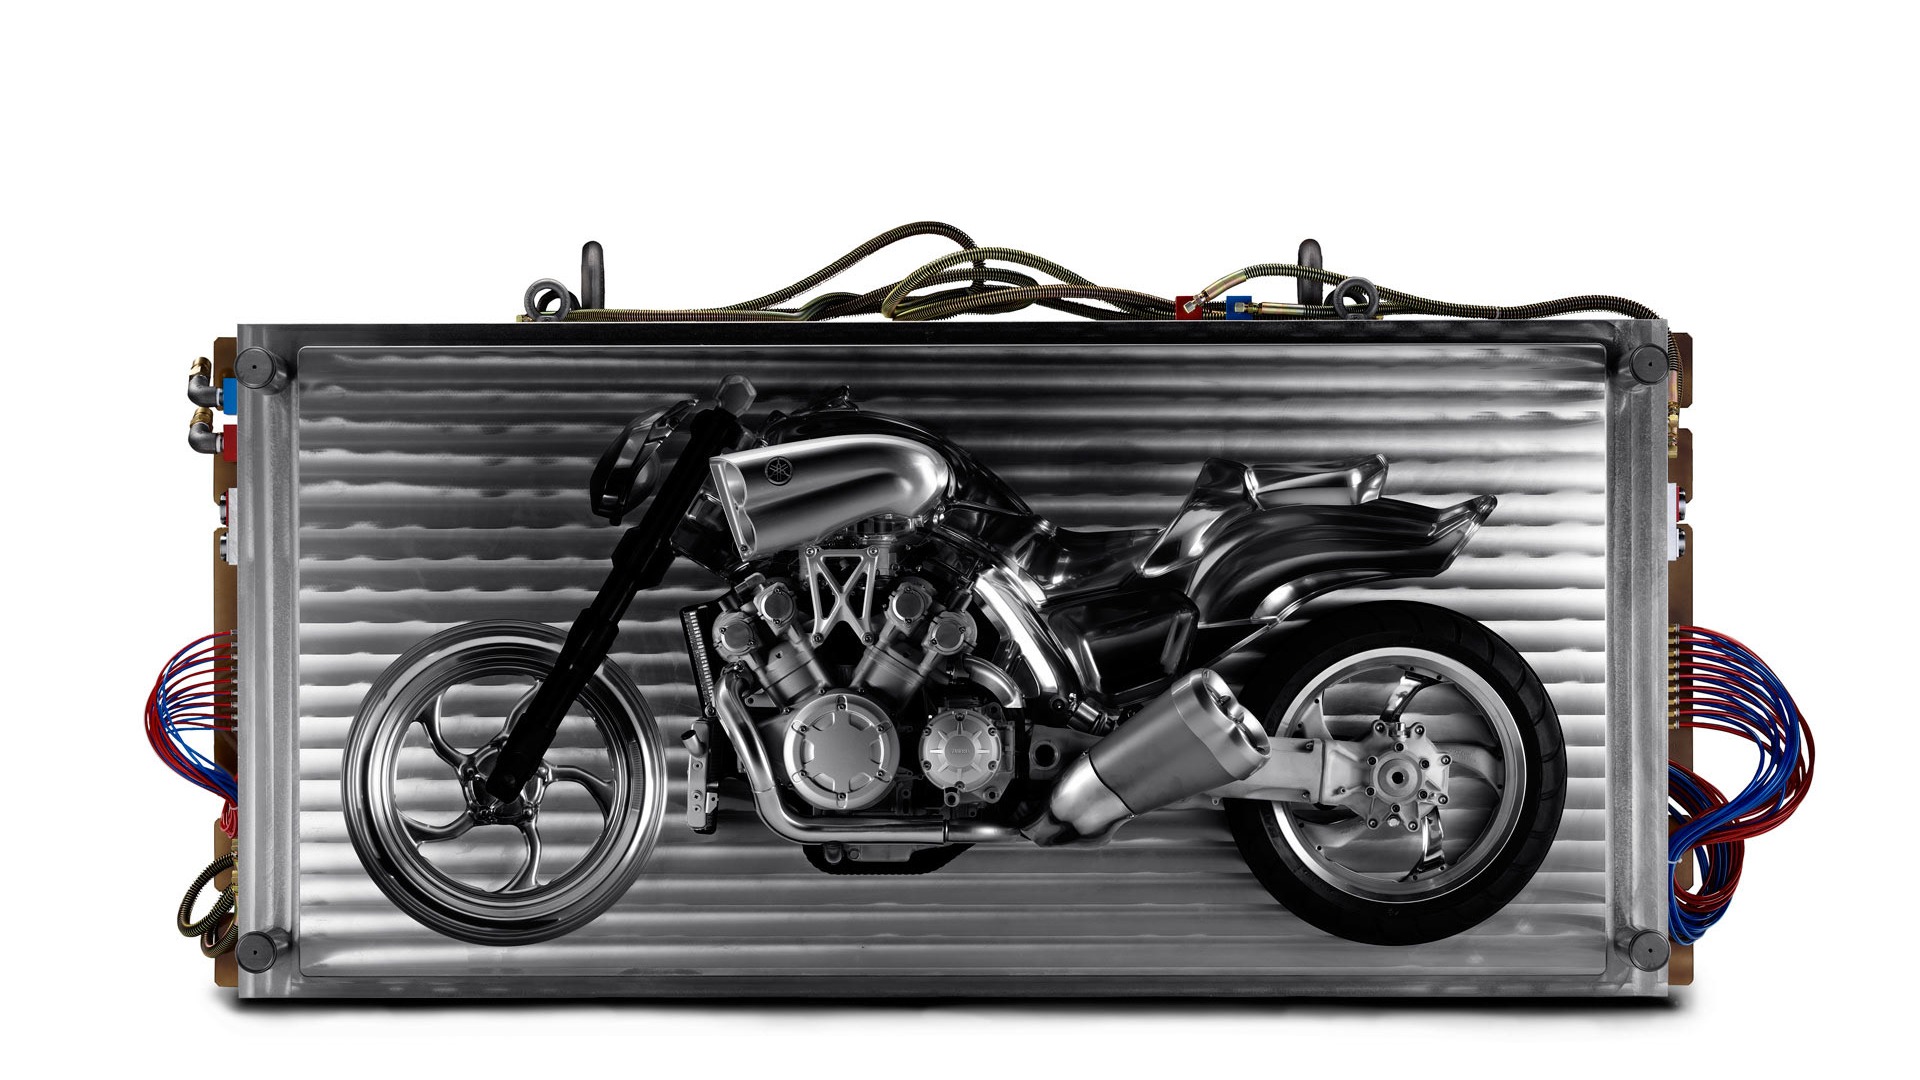 概念摩托车 壁纸(三)17 - 1920x1080